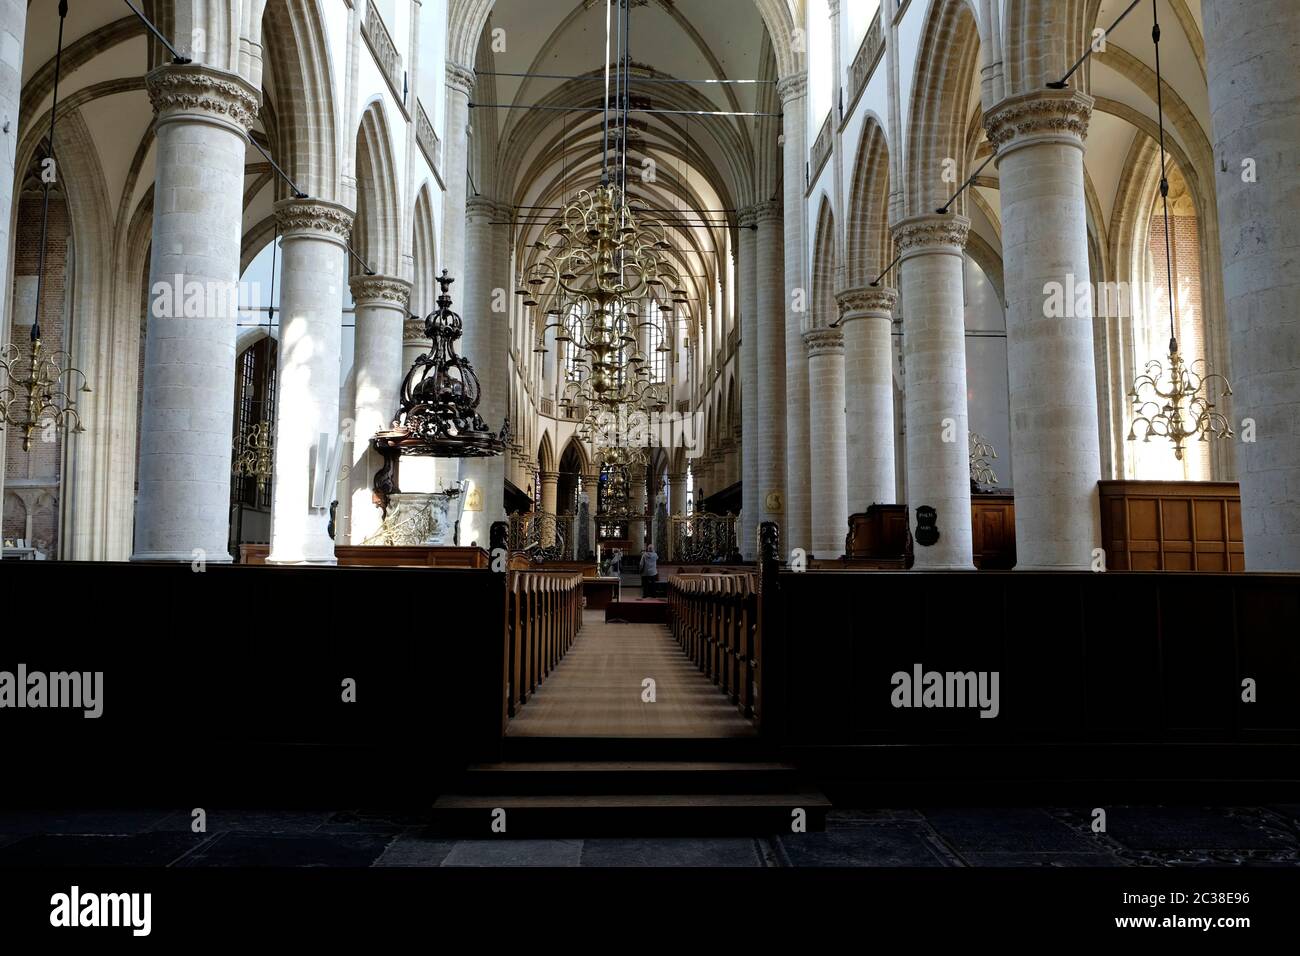 Interior of Dordrecht Minster, or Church of Our Lady, Dordrecht, Netherlands Stock Photo